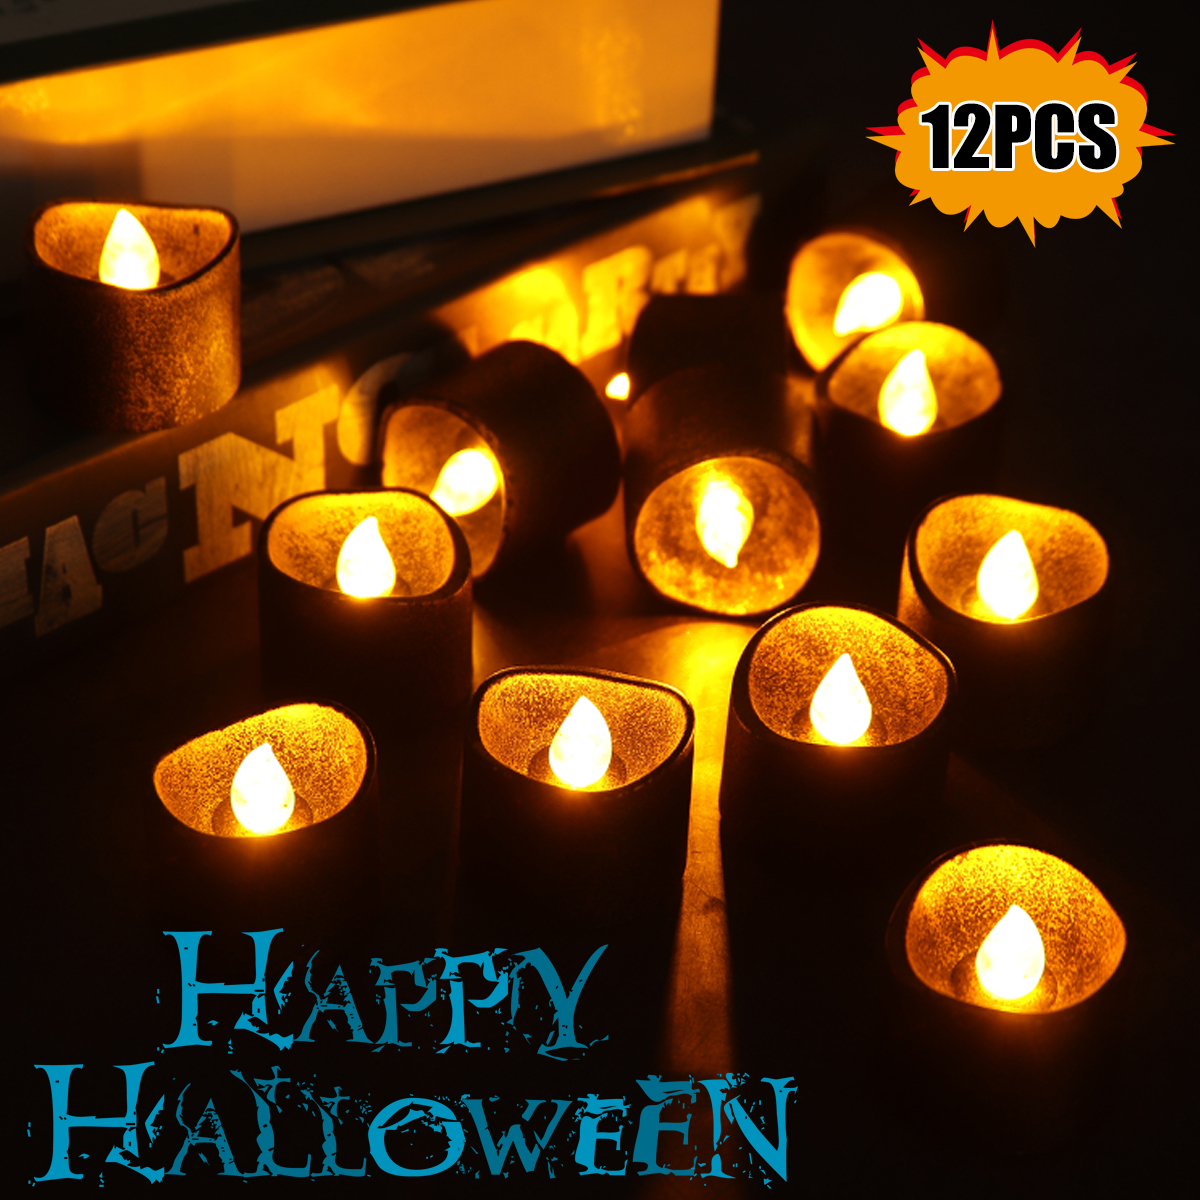 12PCS-Christmas-Halloween-Flameless-Candles-LED-Tea-Lights-Battery-Operated-Deco-1730416-1